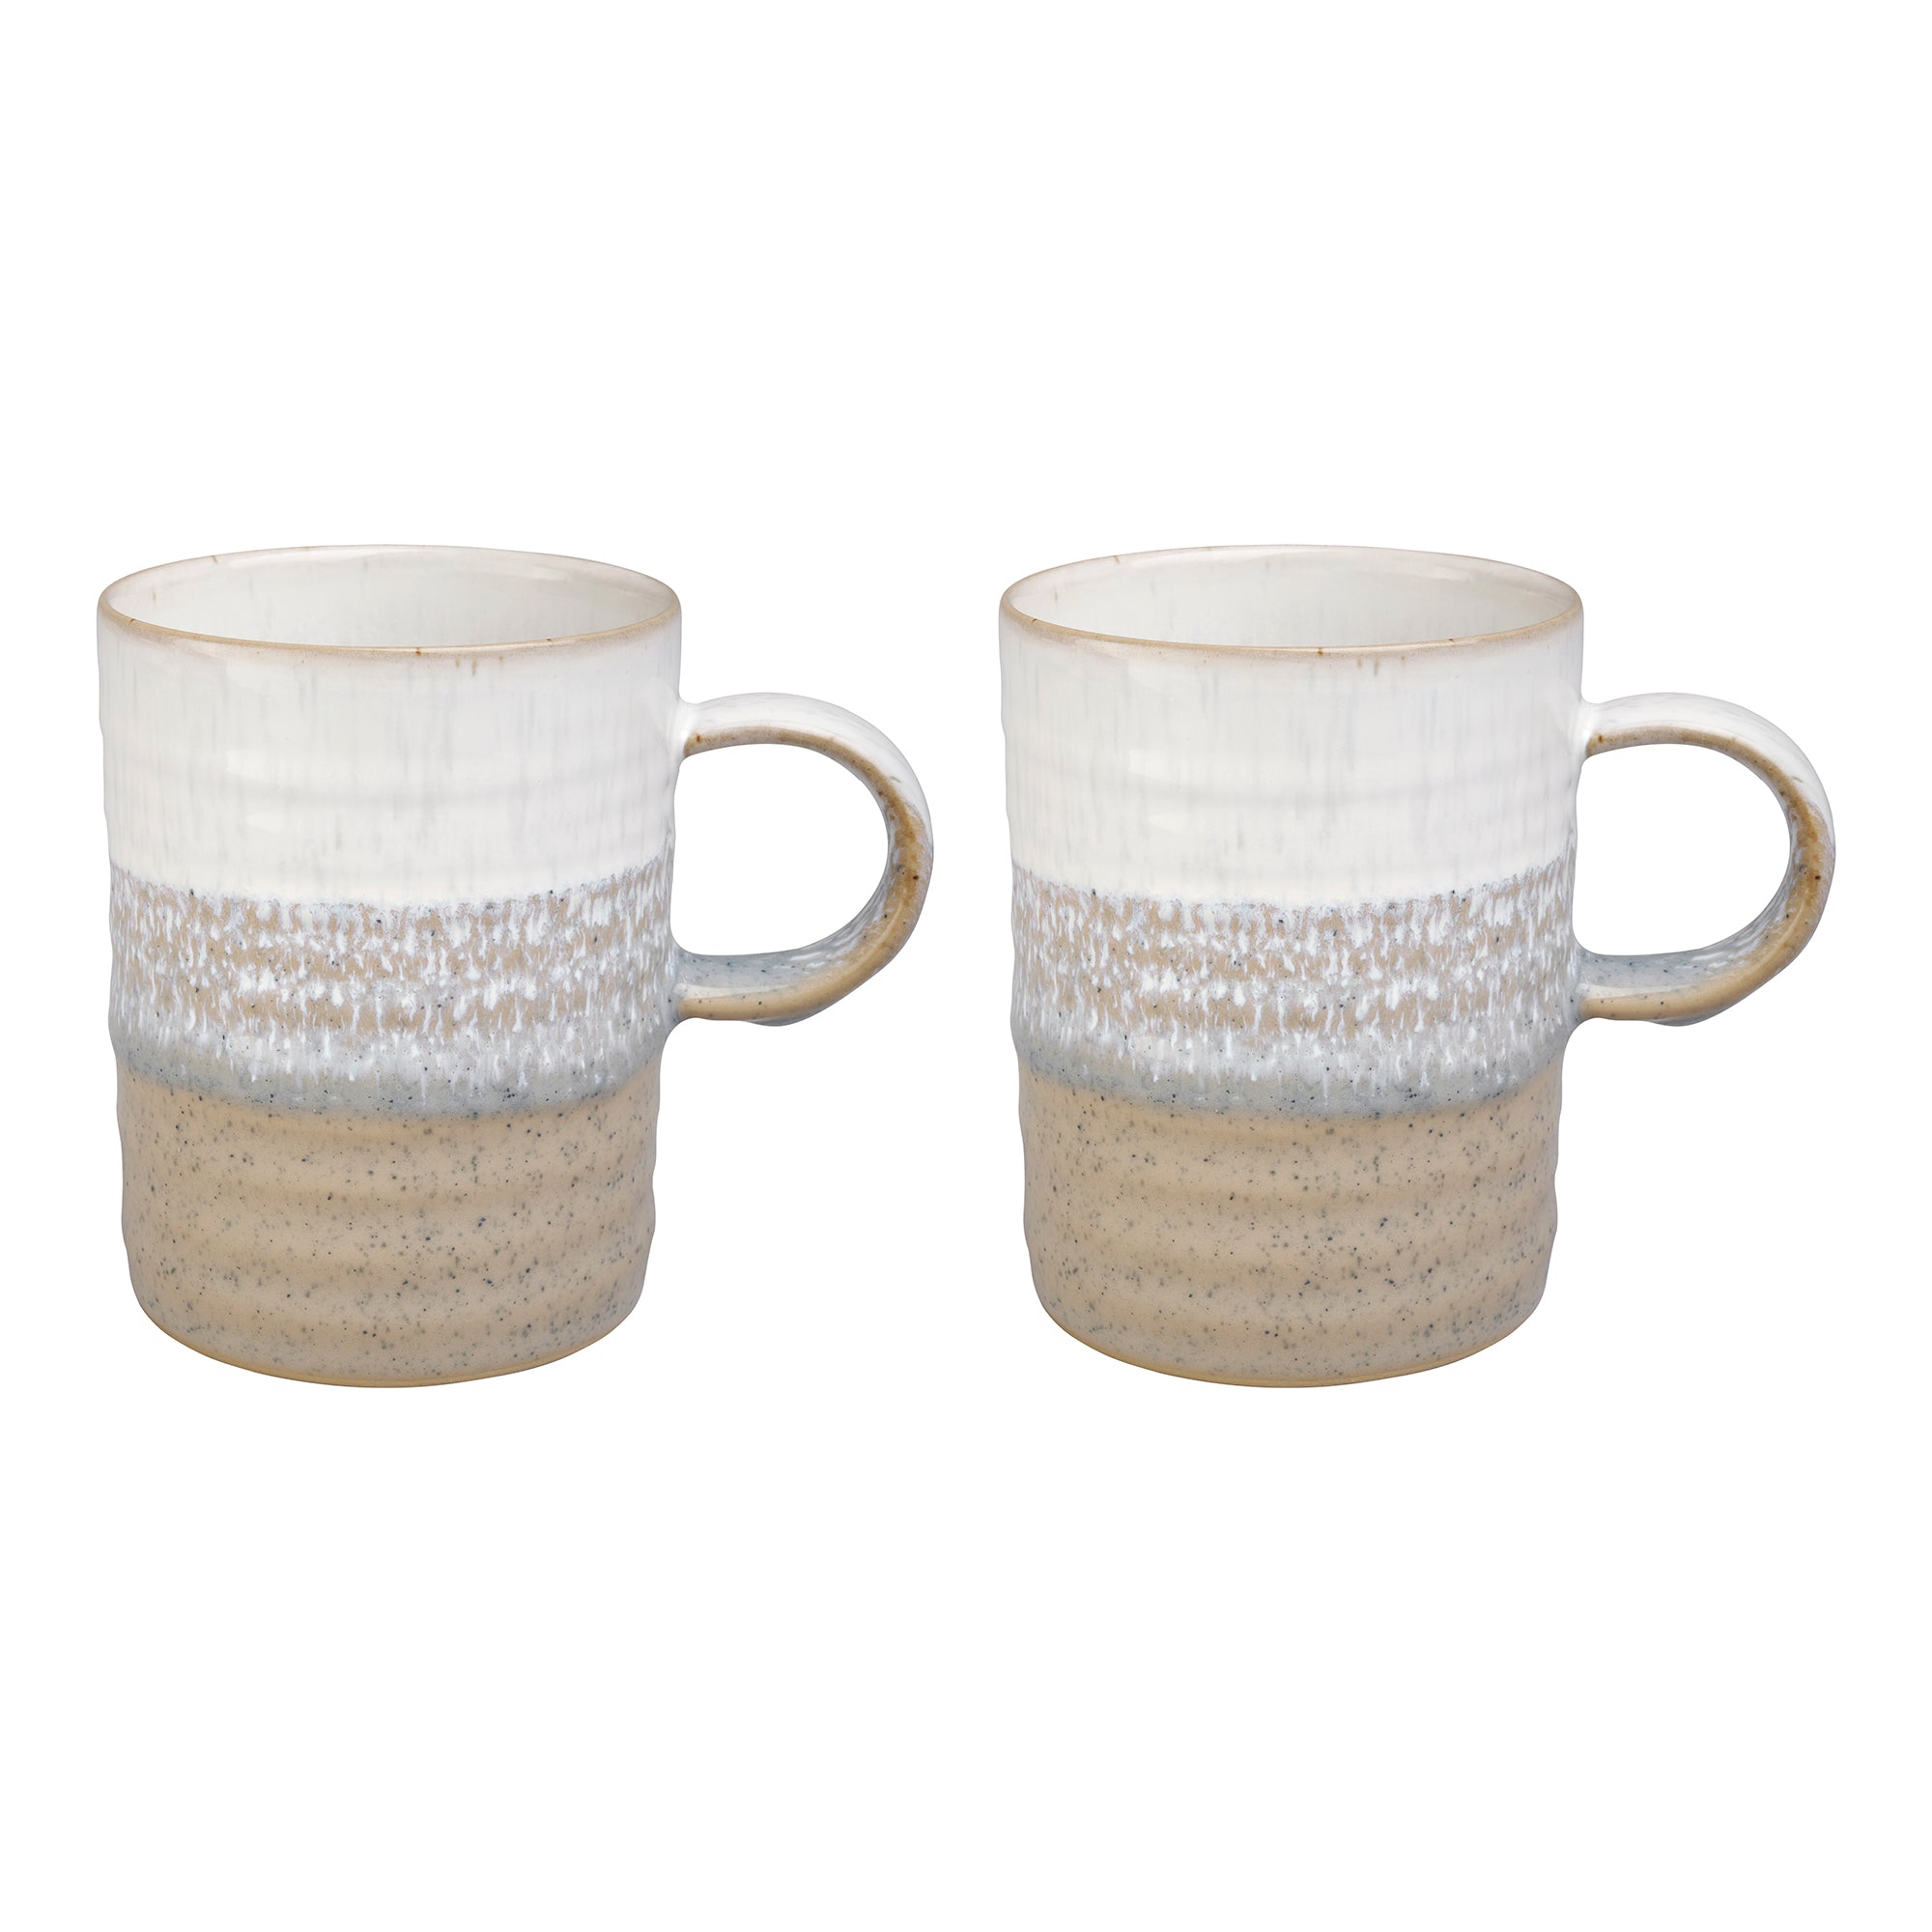 Denby Kiln Mugs - Set of 2